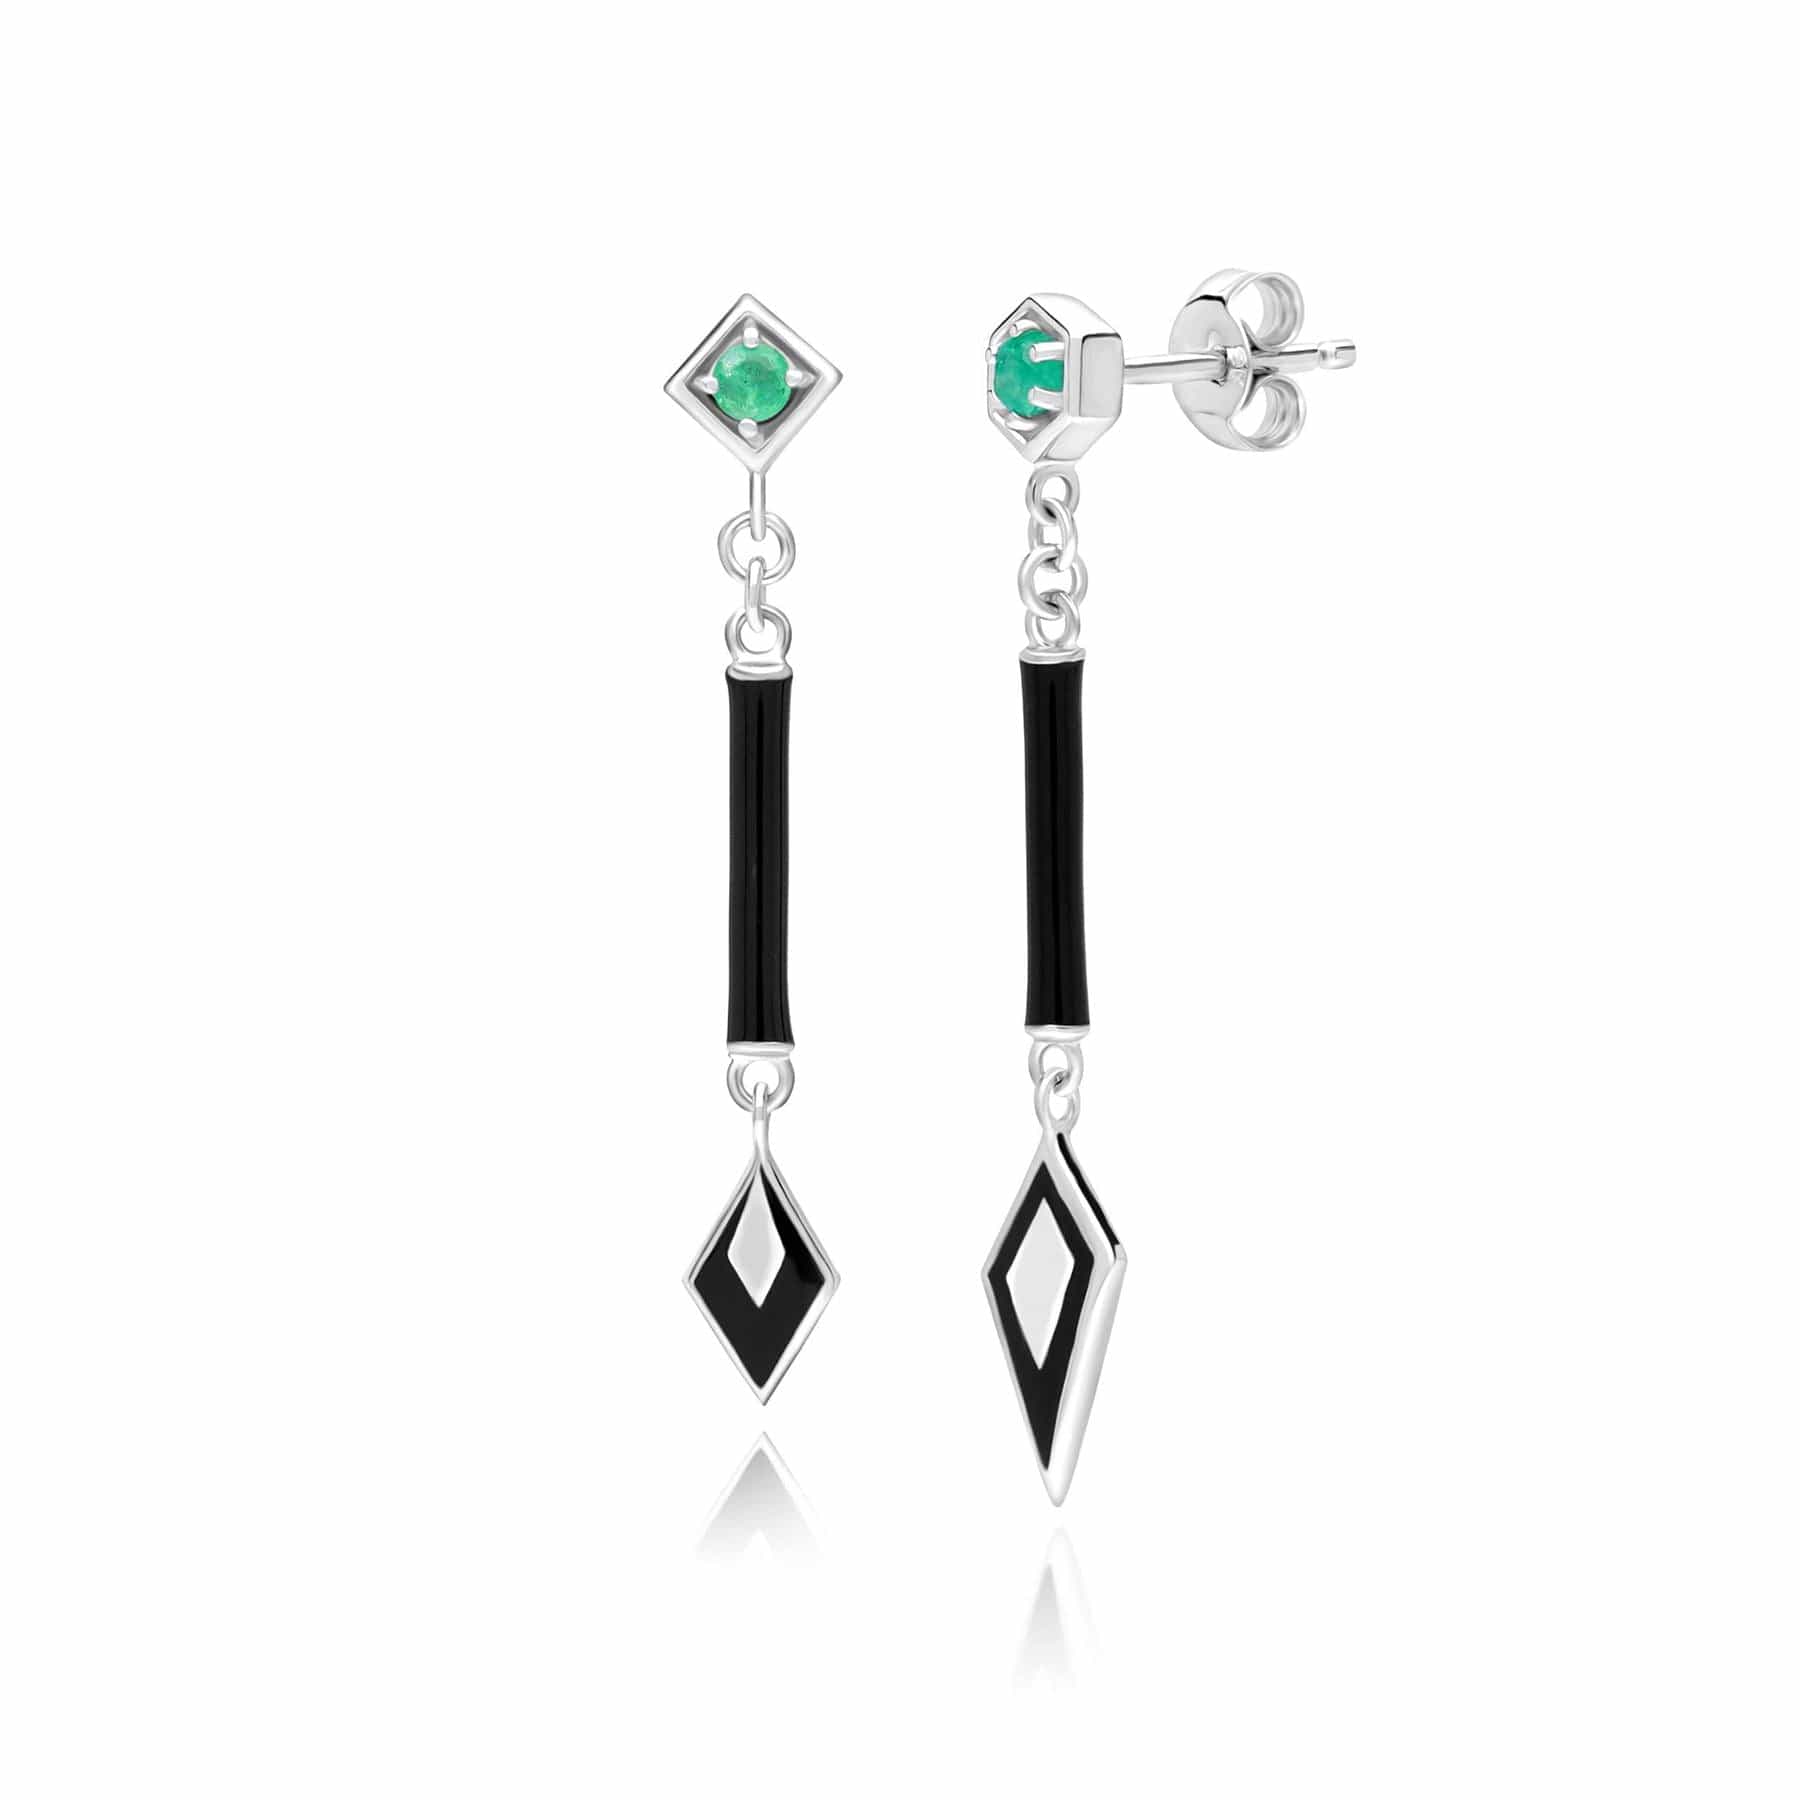 Grand Deco Asymmetrical Emerald Drop Earrings in 9ct White Gold - Gemondo